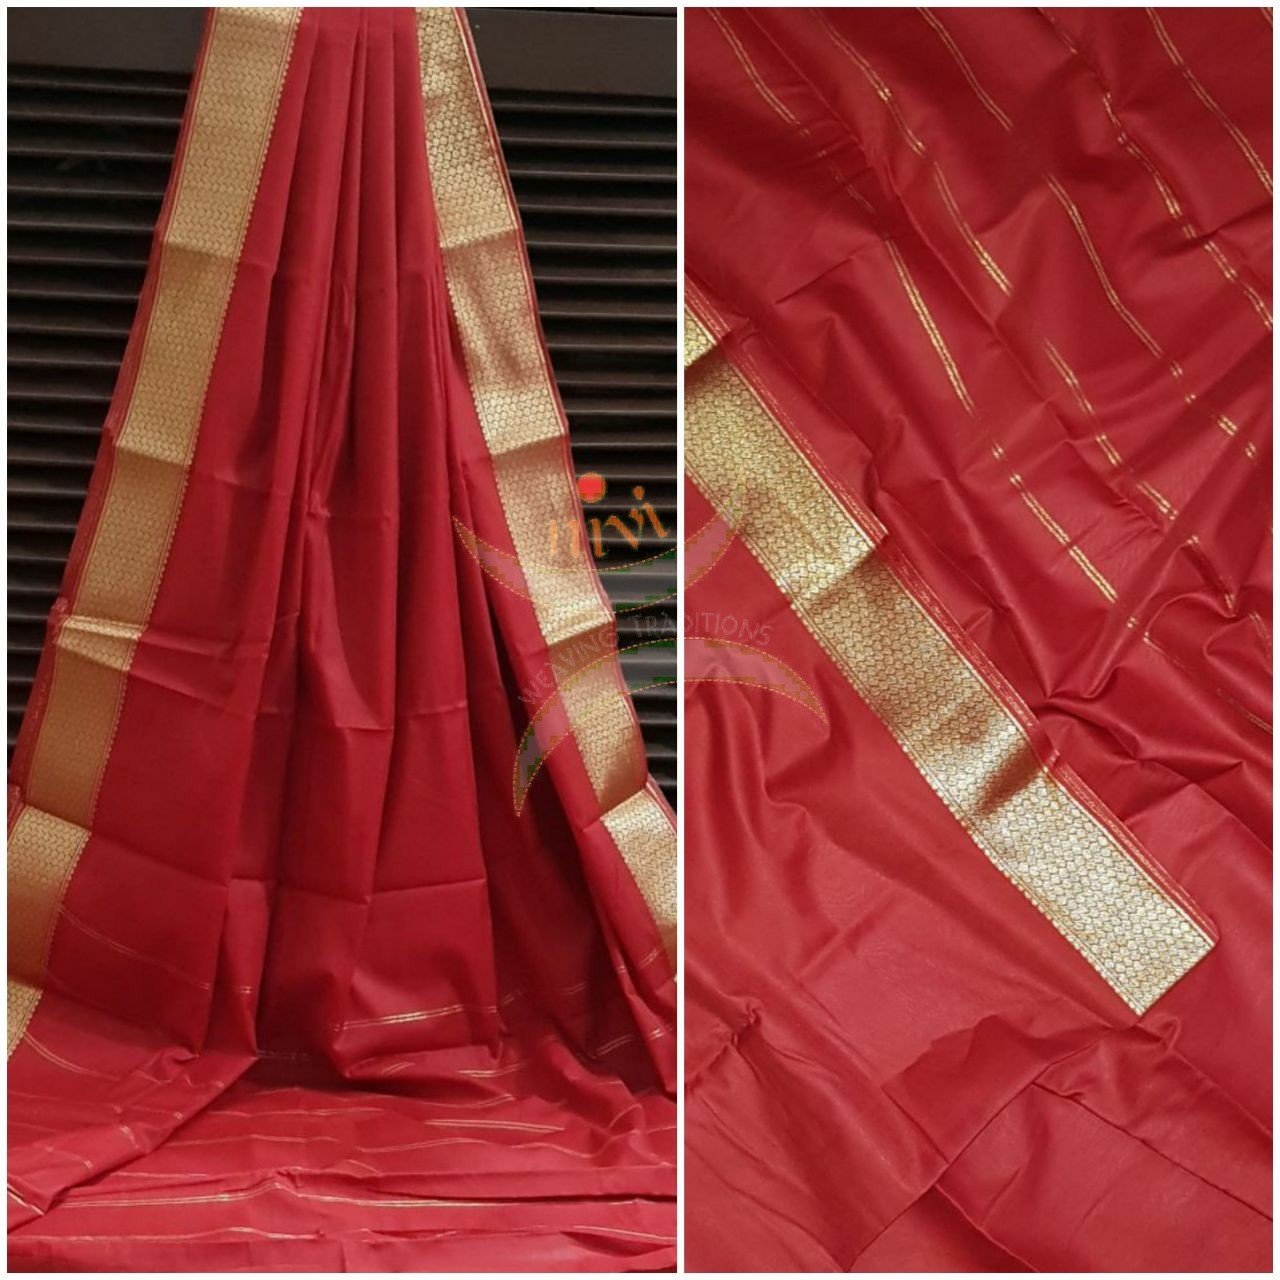 Red cotton blend saree with zari border and thin stripes on pallu.